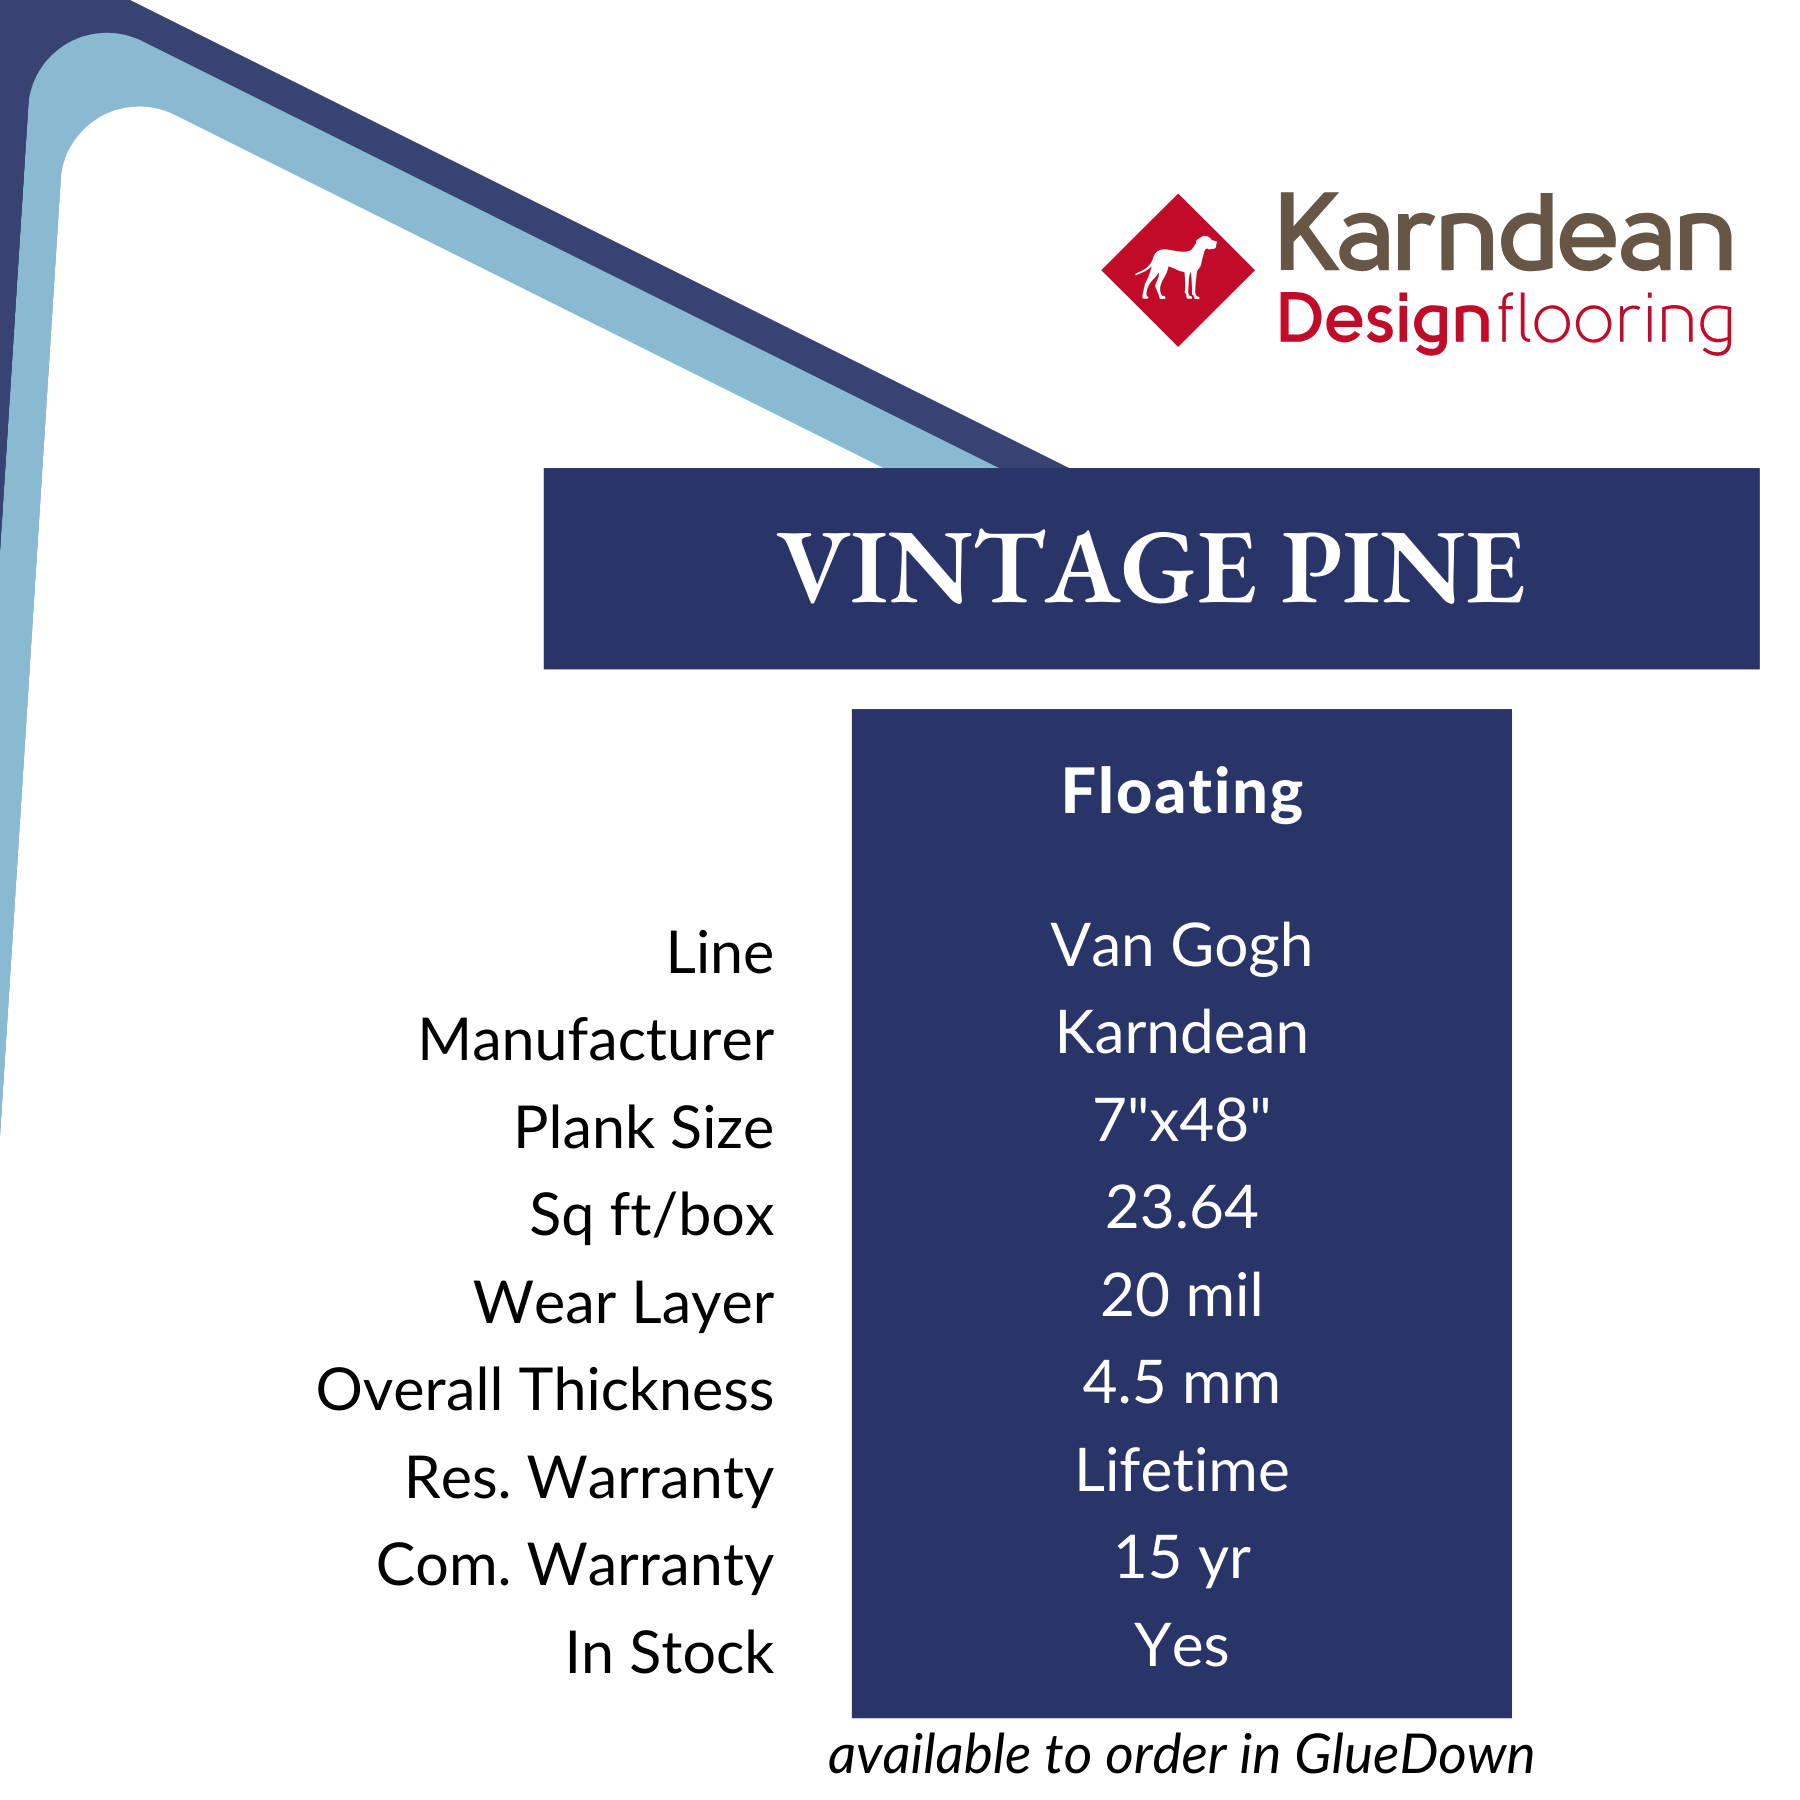 Vintage Pine Luxury Vinyl Flooring from Karndean, sold at Calhoun’s, Springfield, IL specs